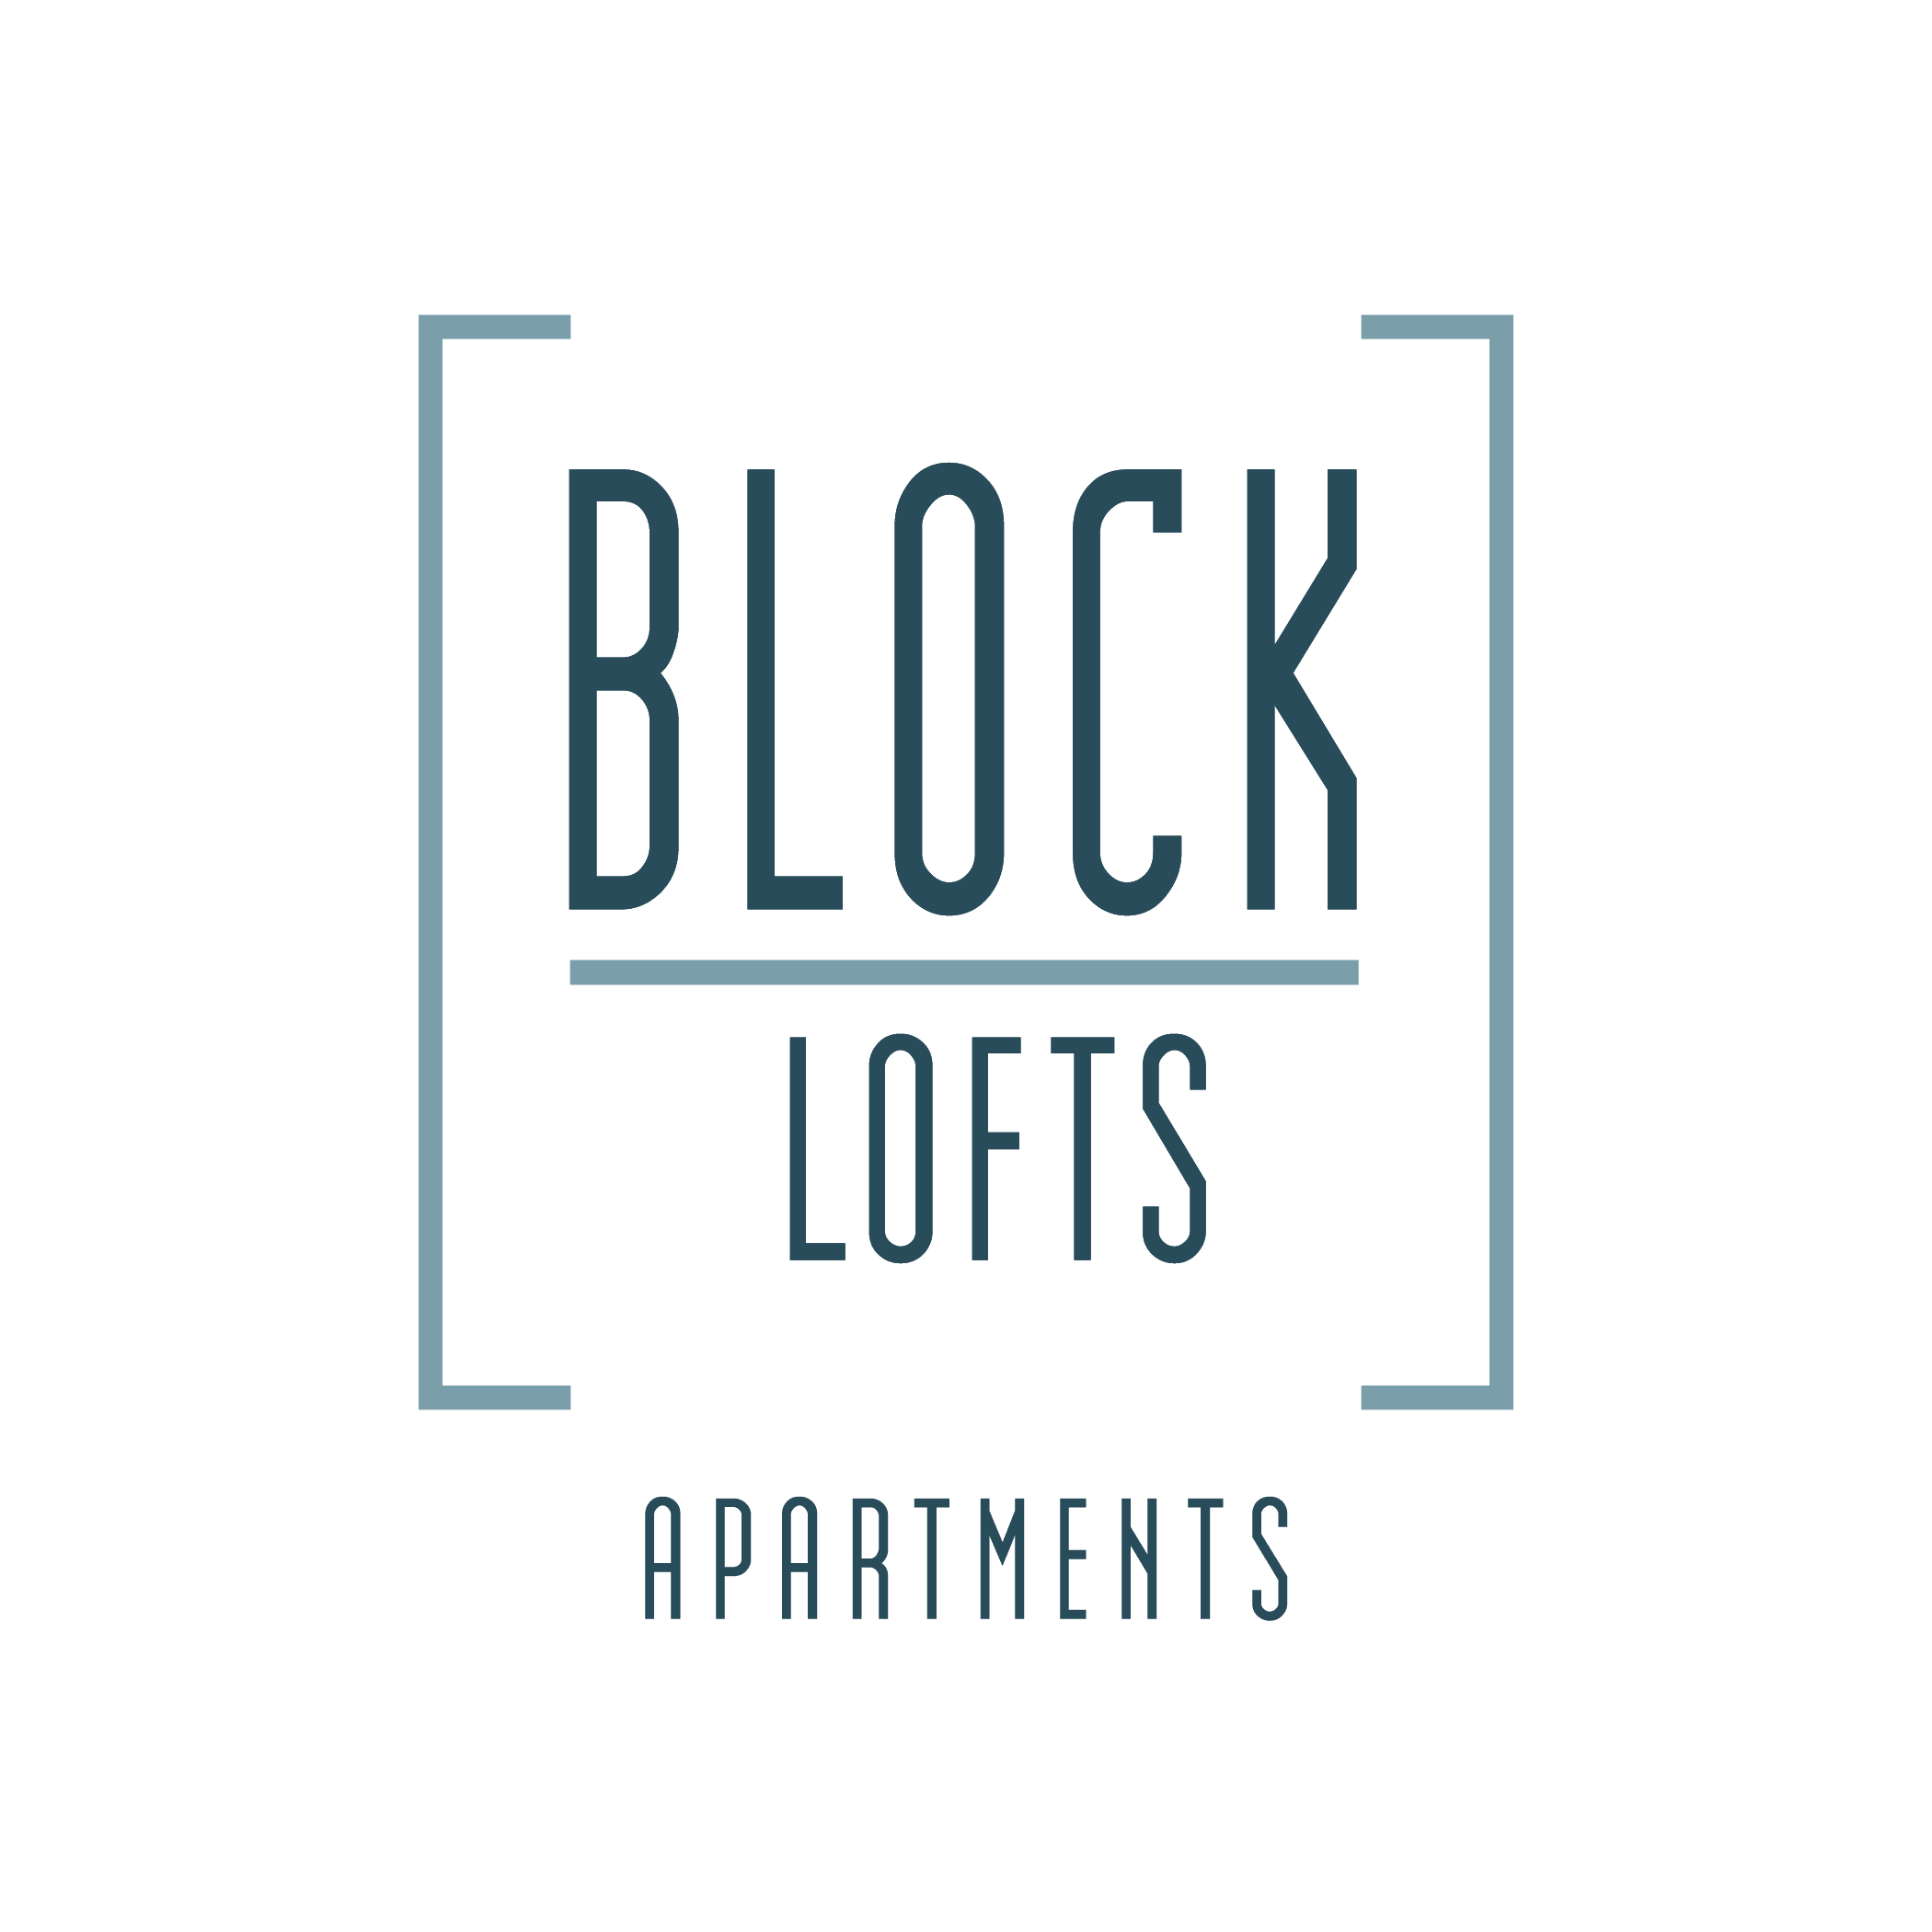 Block Lofts